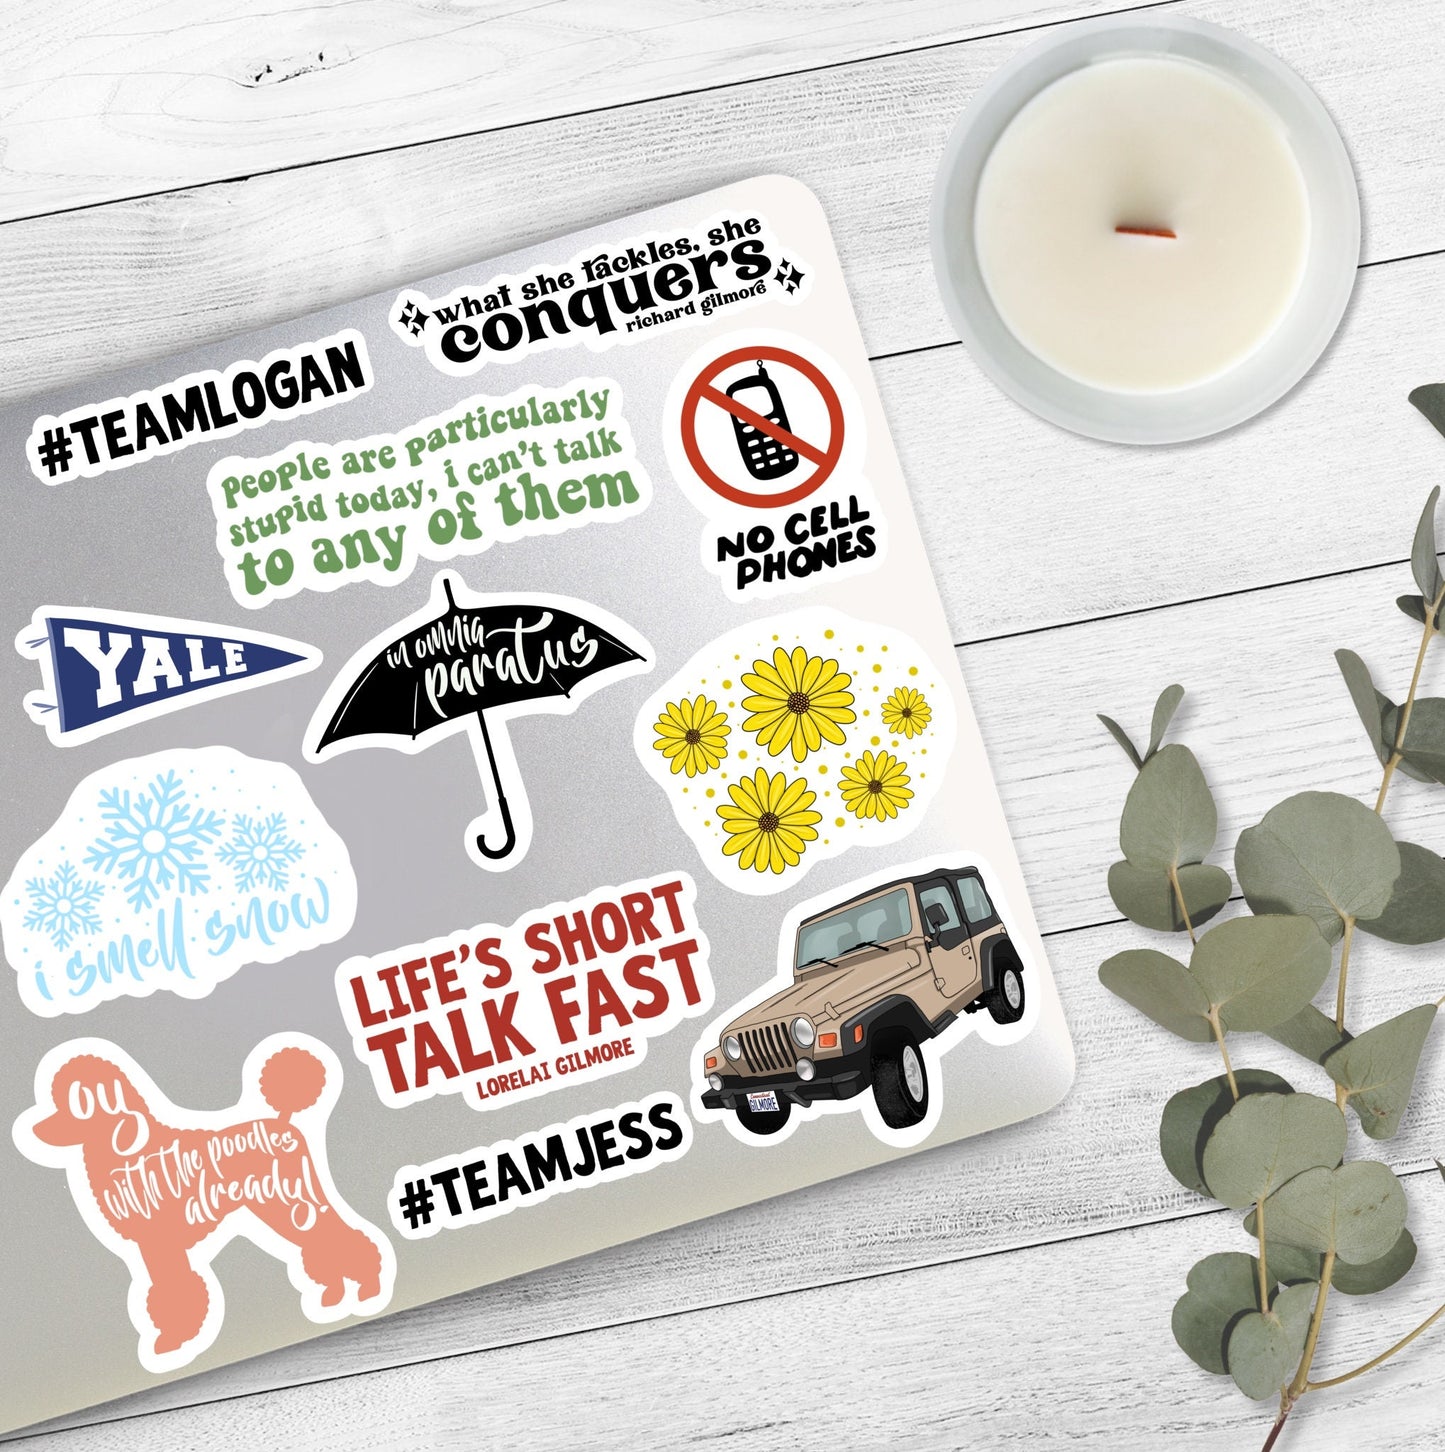 Lorelai's Jeep | Gilmore Girls Sticker